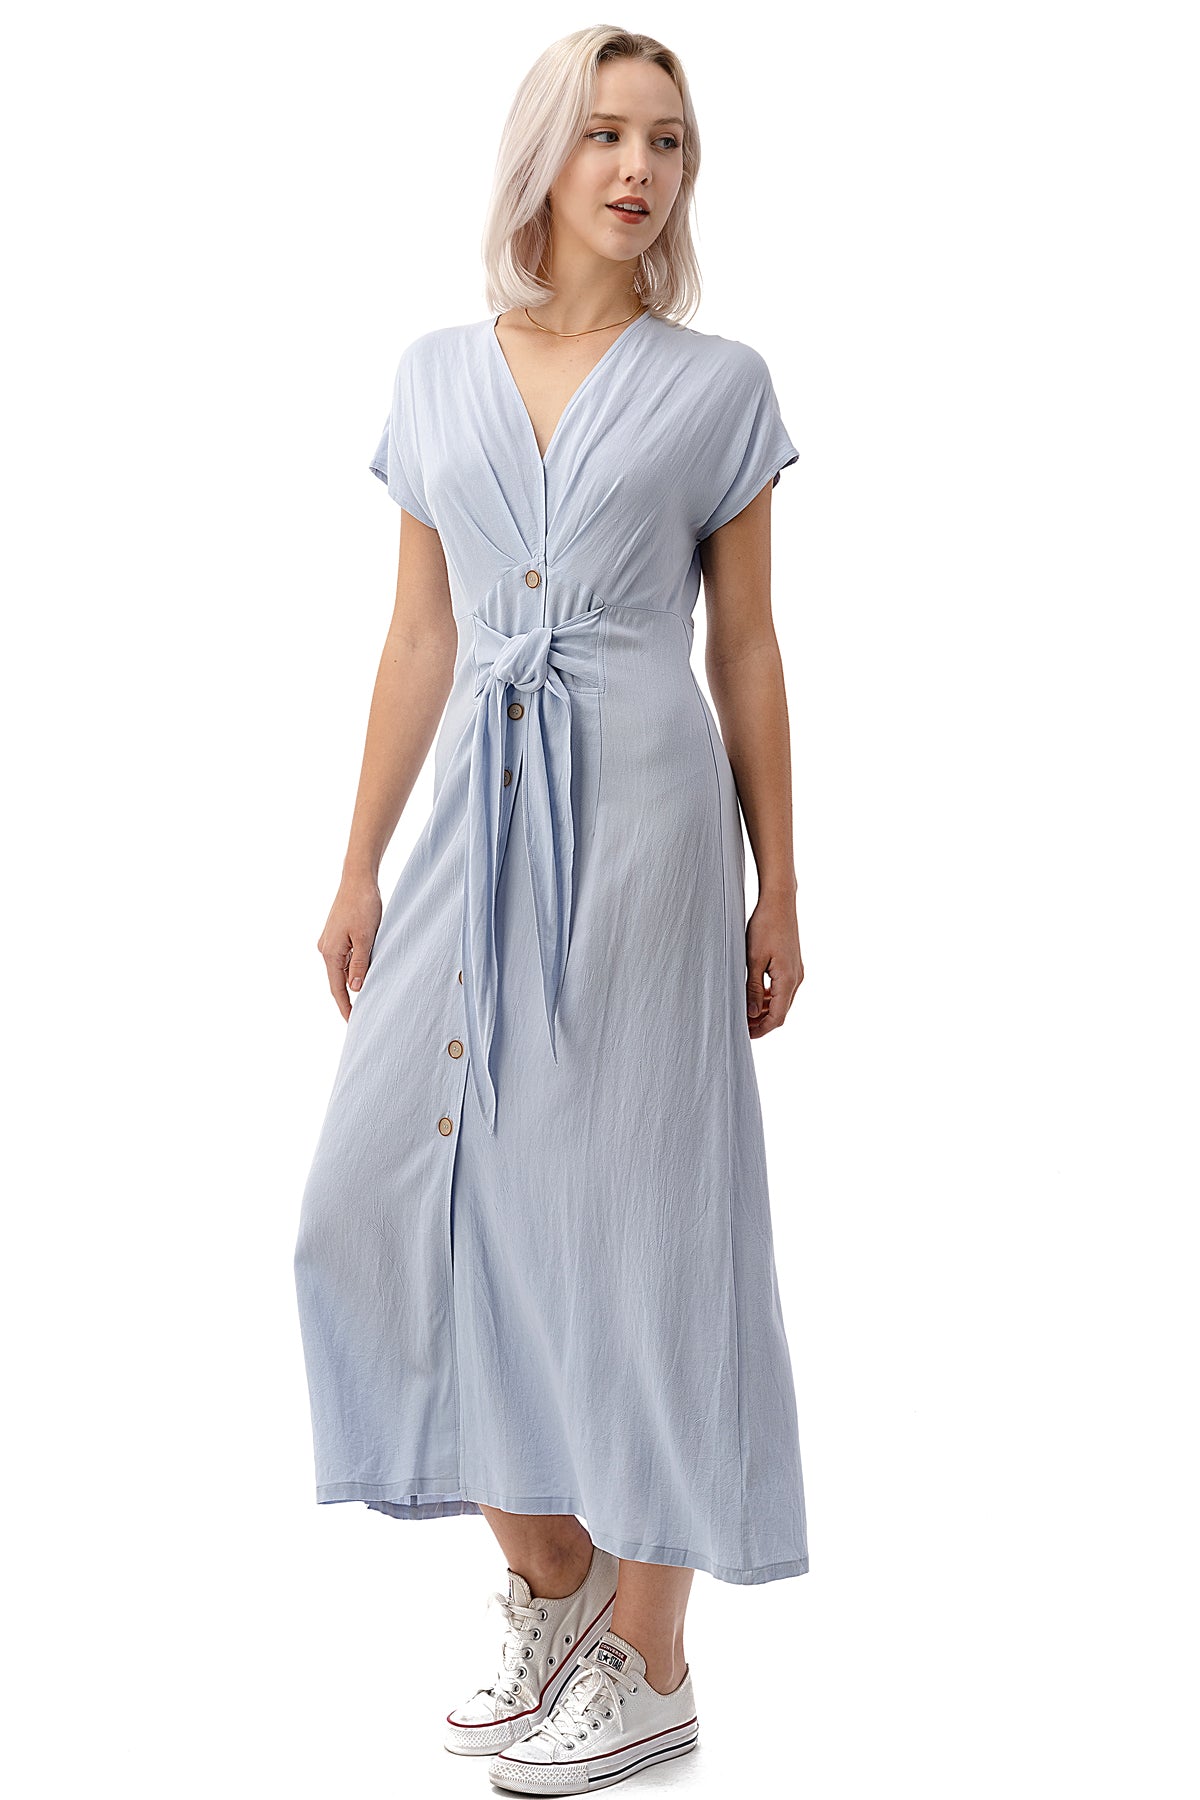 EDGY Land Girl's and Women's Cap Sleeve V-Neck Button Down Self Tie Waist Smocked Flowey Tea-length Dress